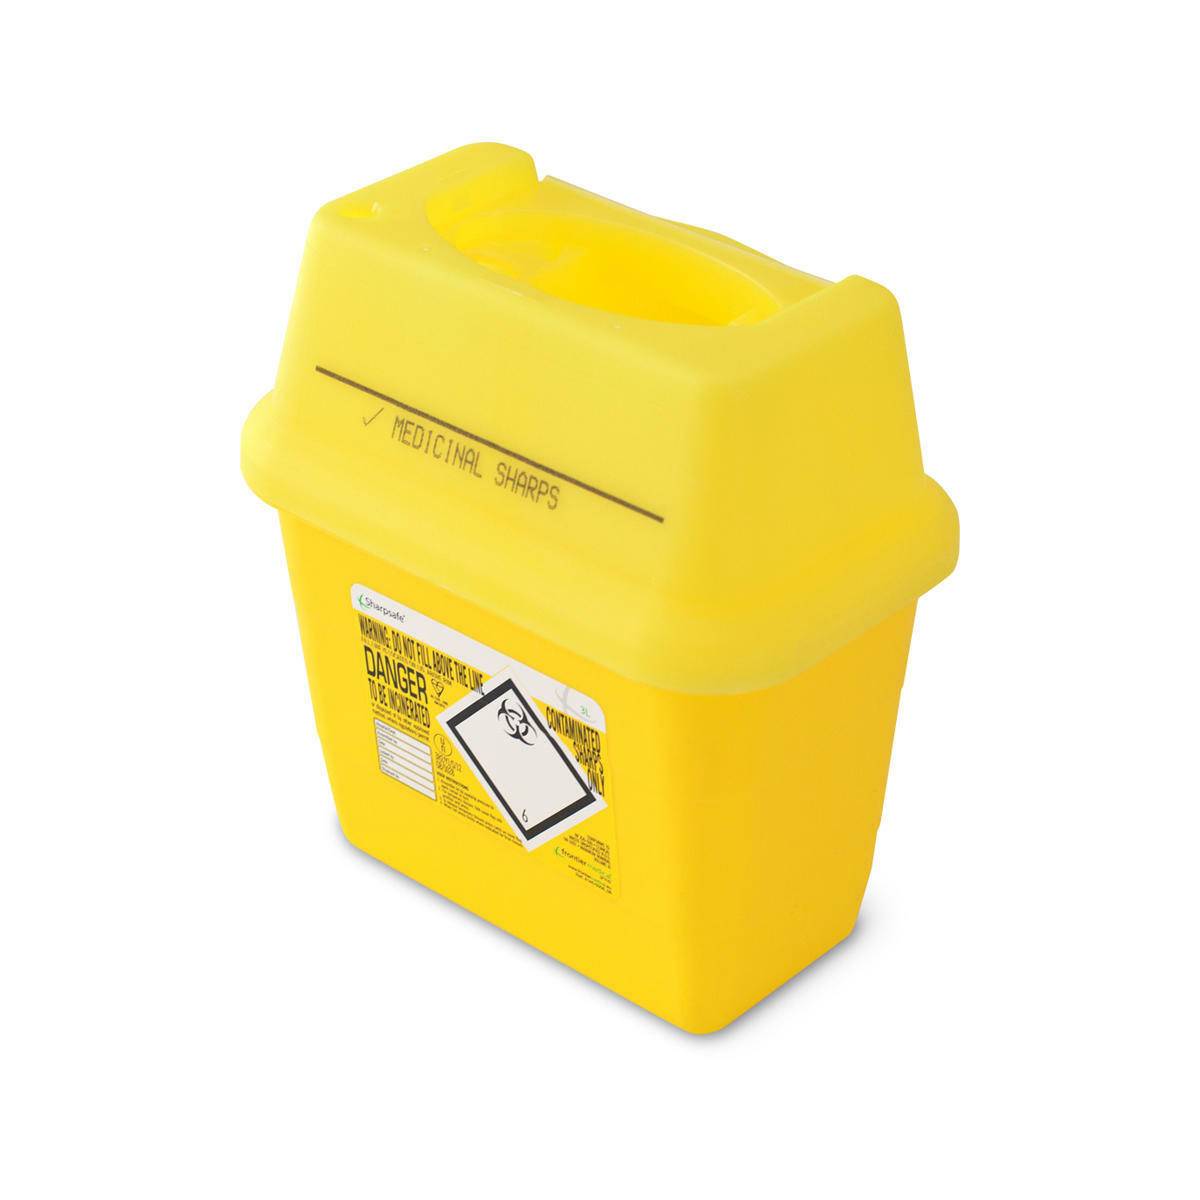 Frontier 3 litre Sharpsafe Yellow sharps bin - UKMEDI